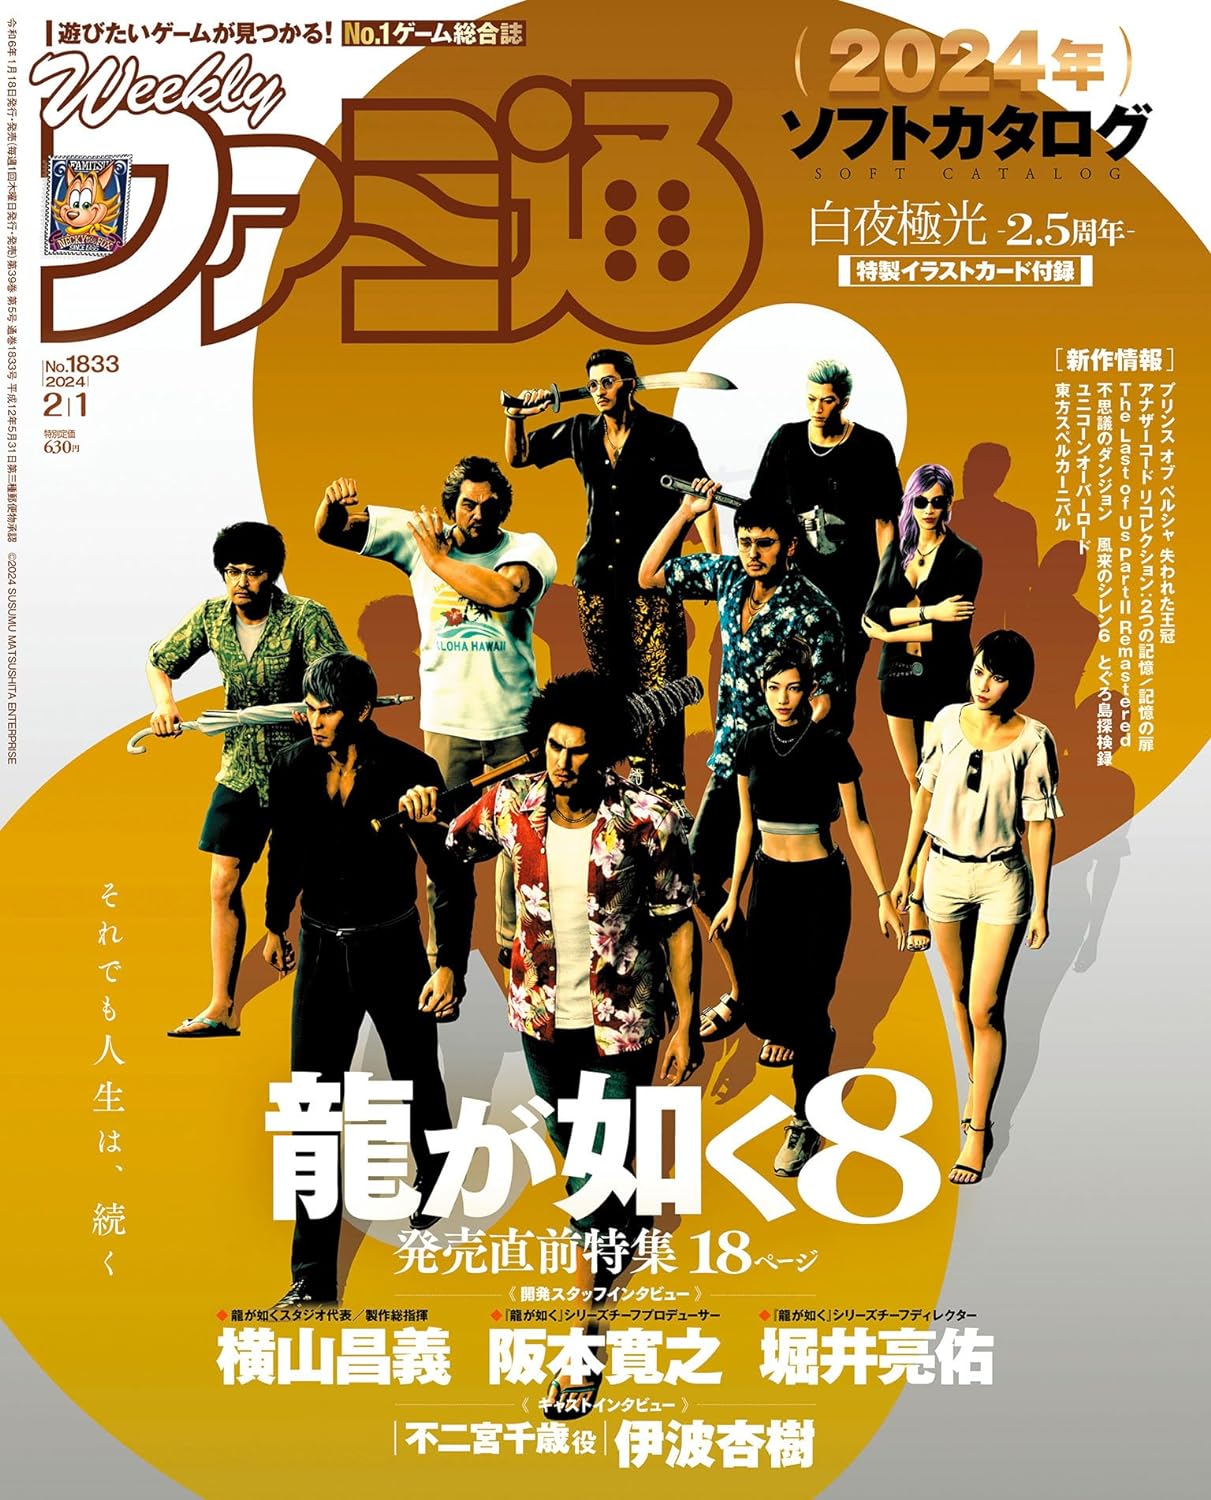 SPECIAL ORDER Kadokawa - Weekly Famitsu February 1, 2024 issue No.1833